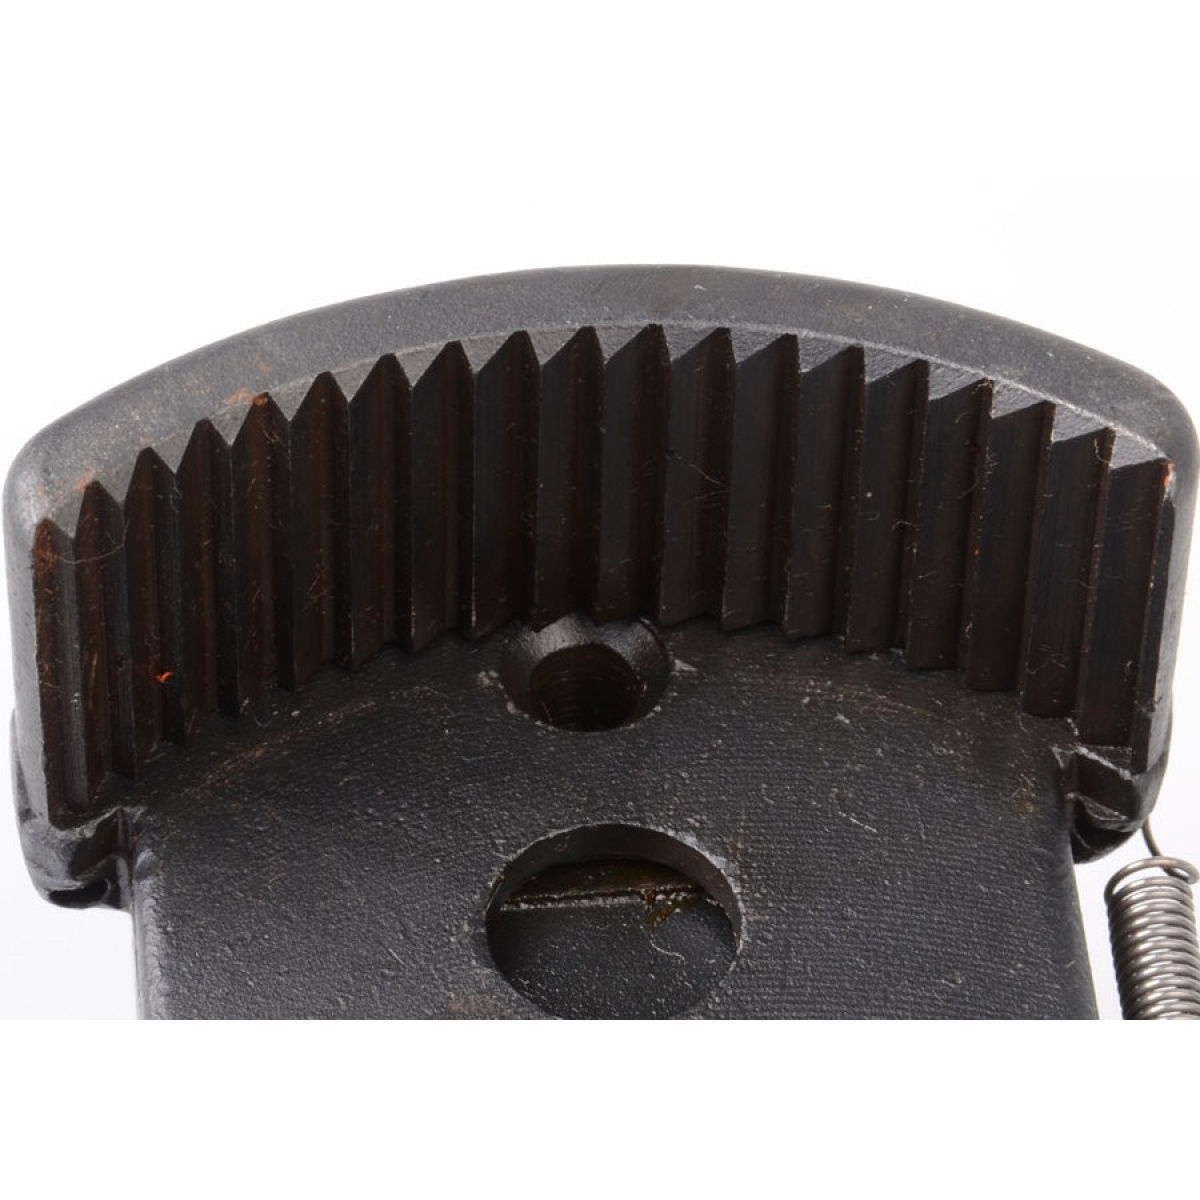 Klíč na olejový filtr, dvojnožka, D 60-80 mm (1/2)